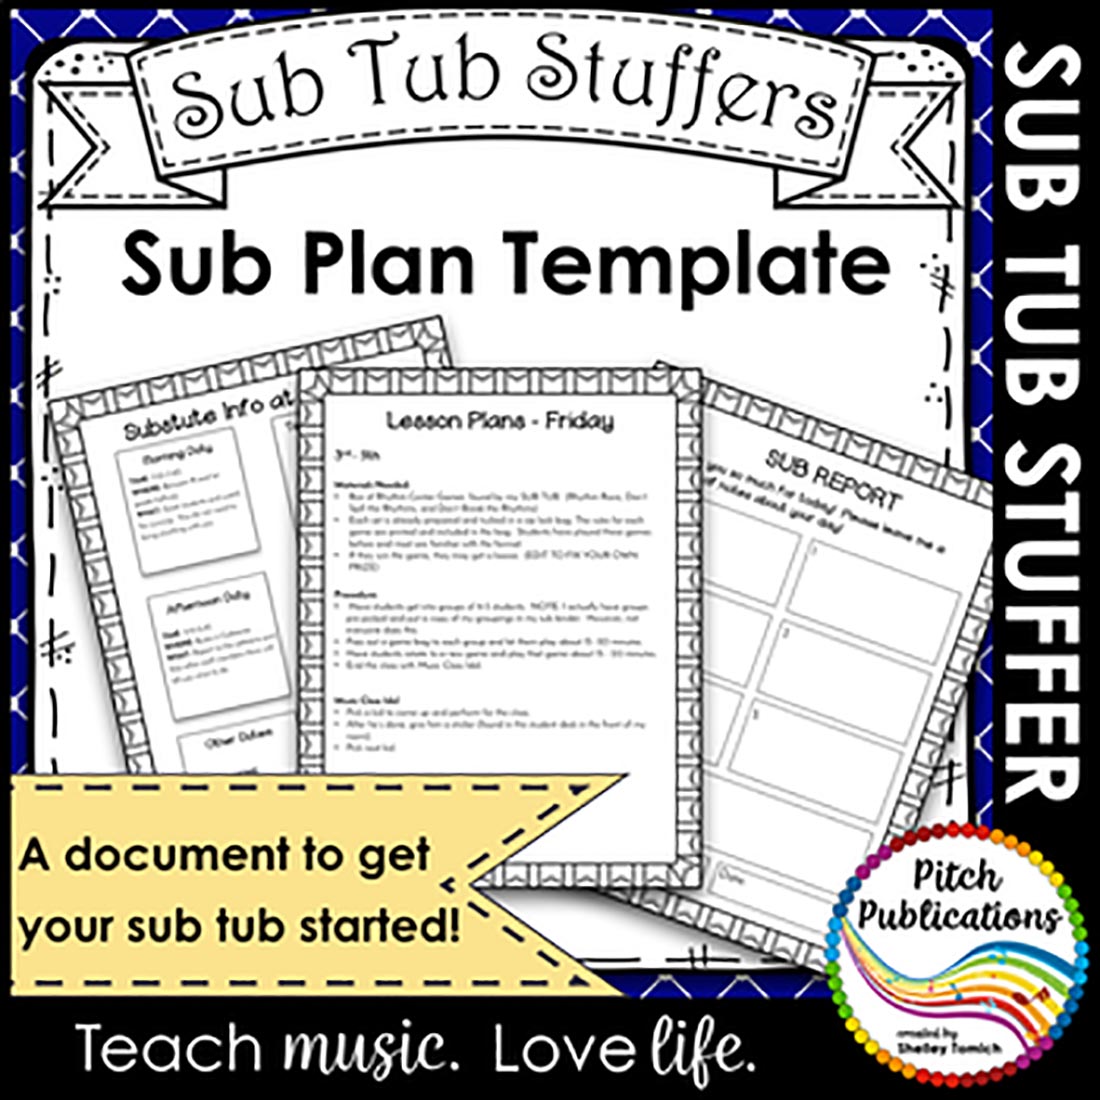 Music Sub Tub Stuffers: Music Sub Plan Template - Substitute Plans Editable cover image.